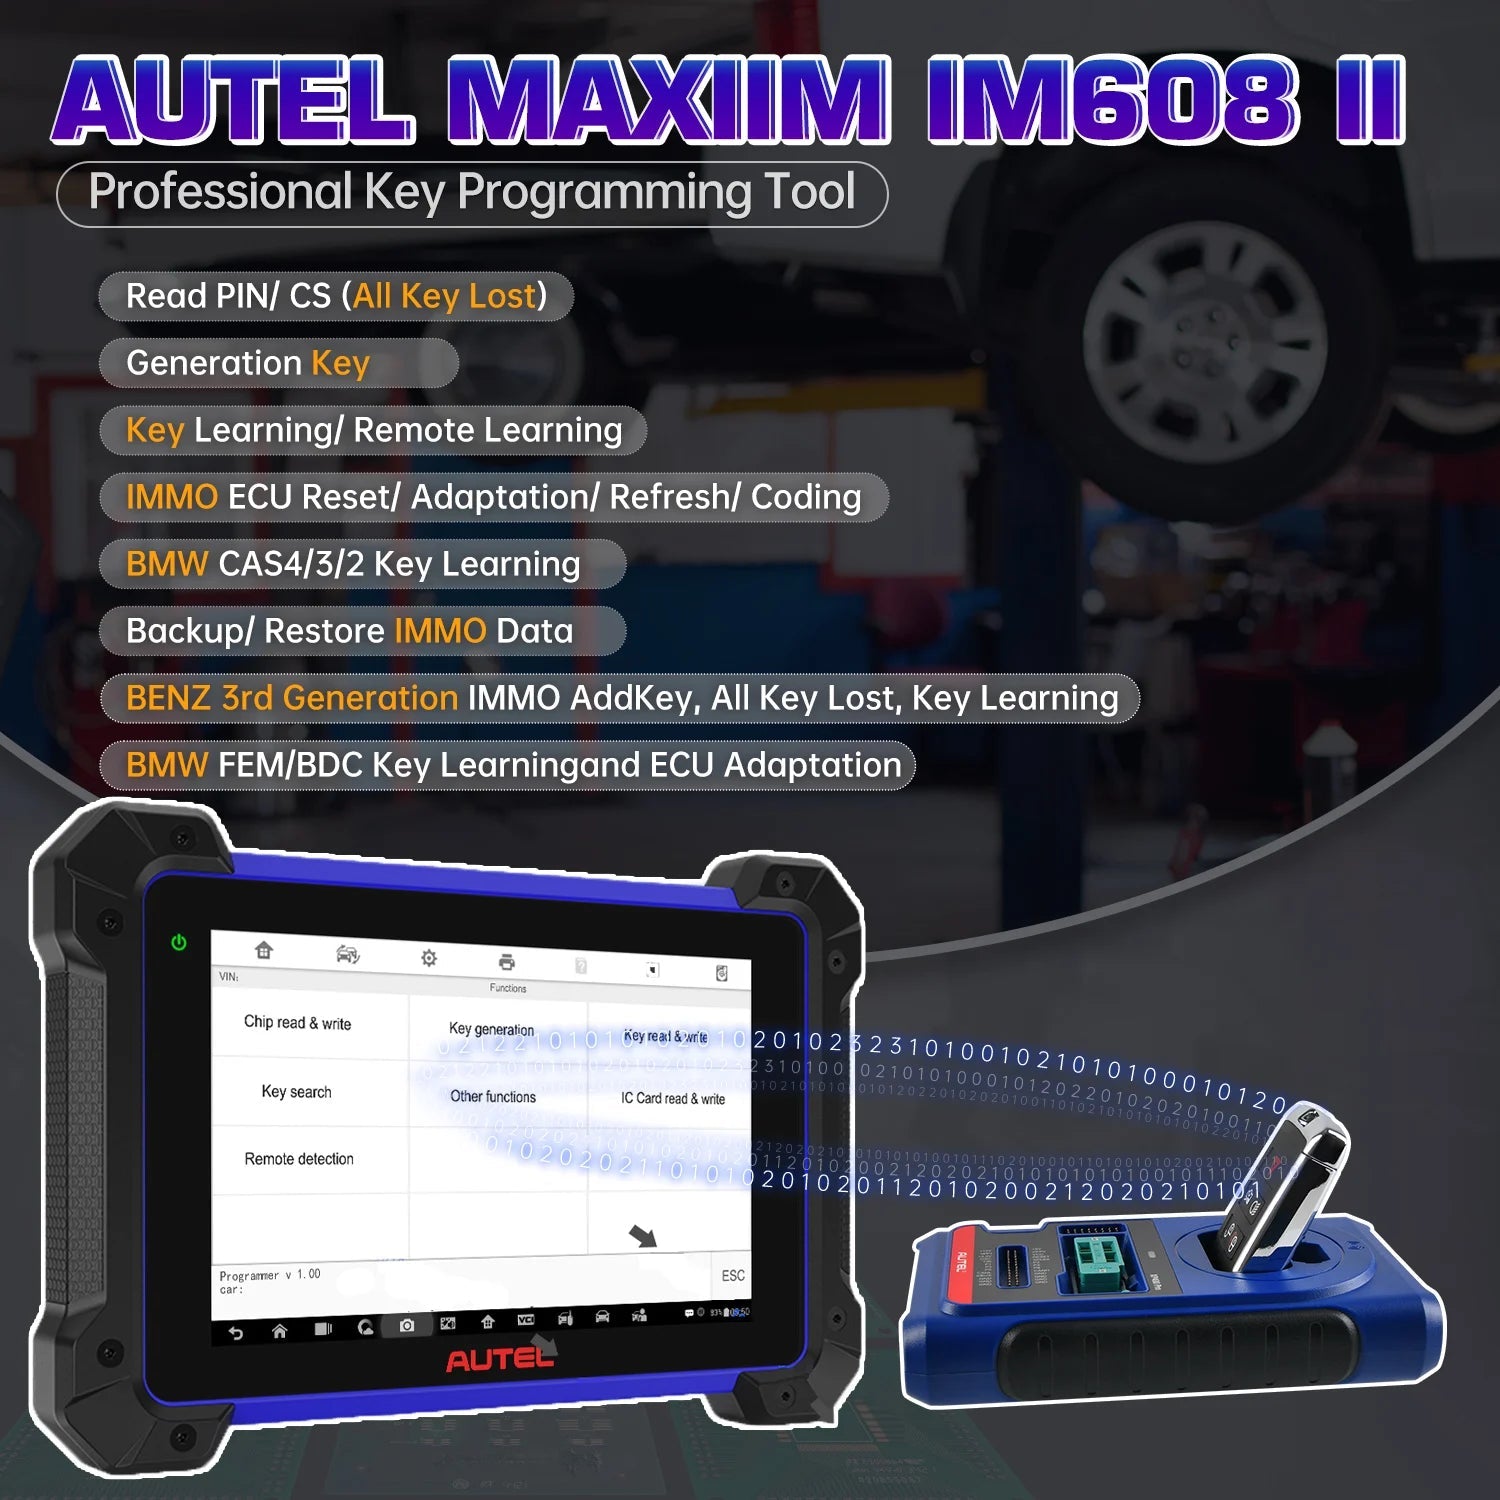 Autel MaxiIM IM608S II Automotive All-In-One Key Programming Tool Come with G-Box3, APB112, IMKPA Upgraded Version of IM608 PRO - Dynamex